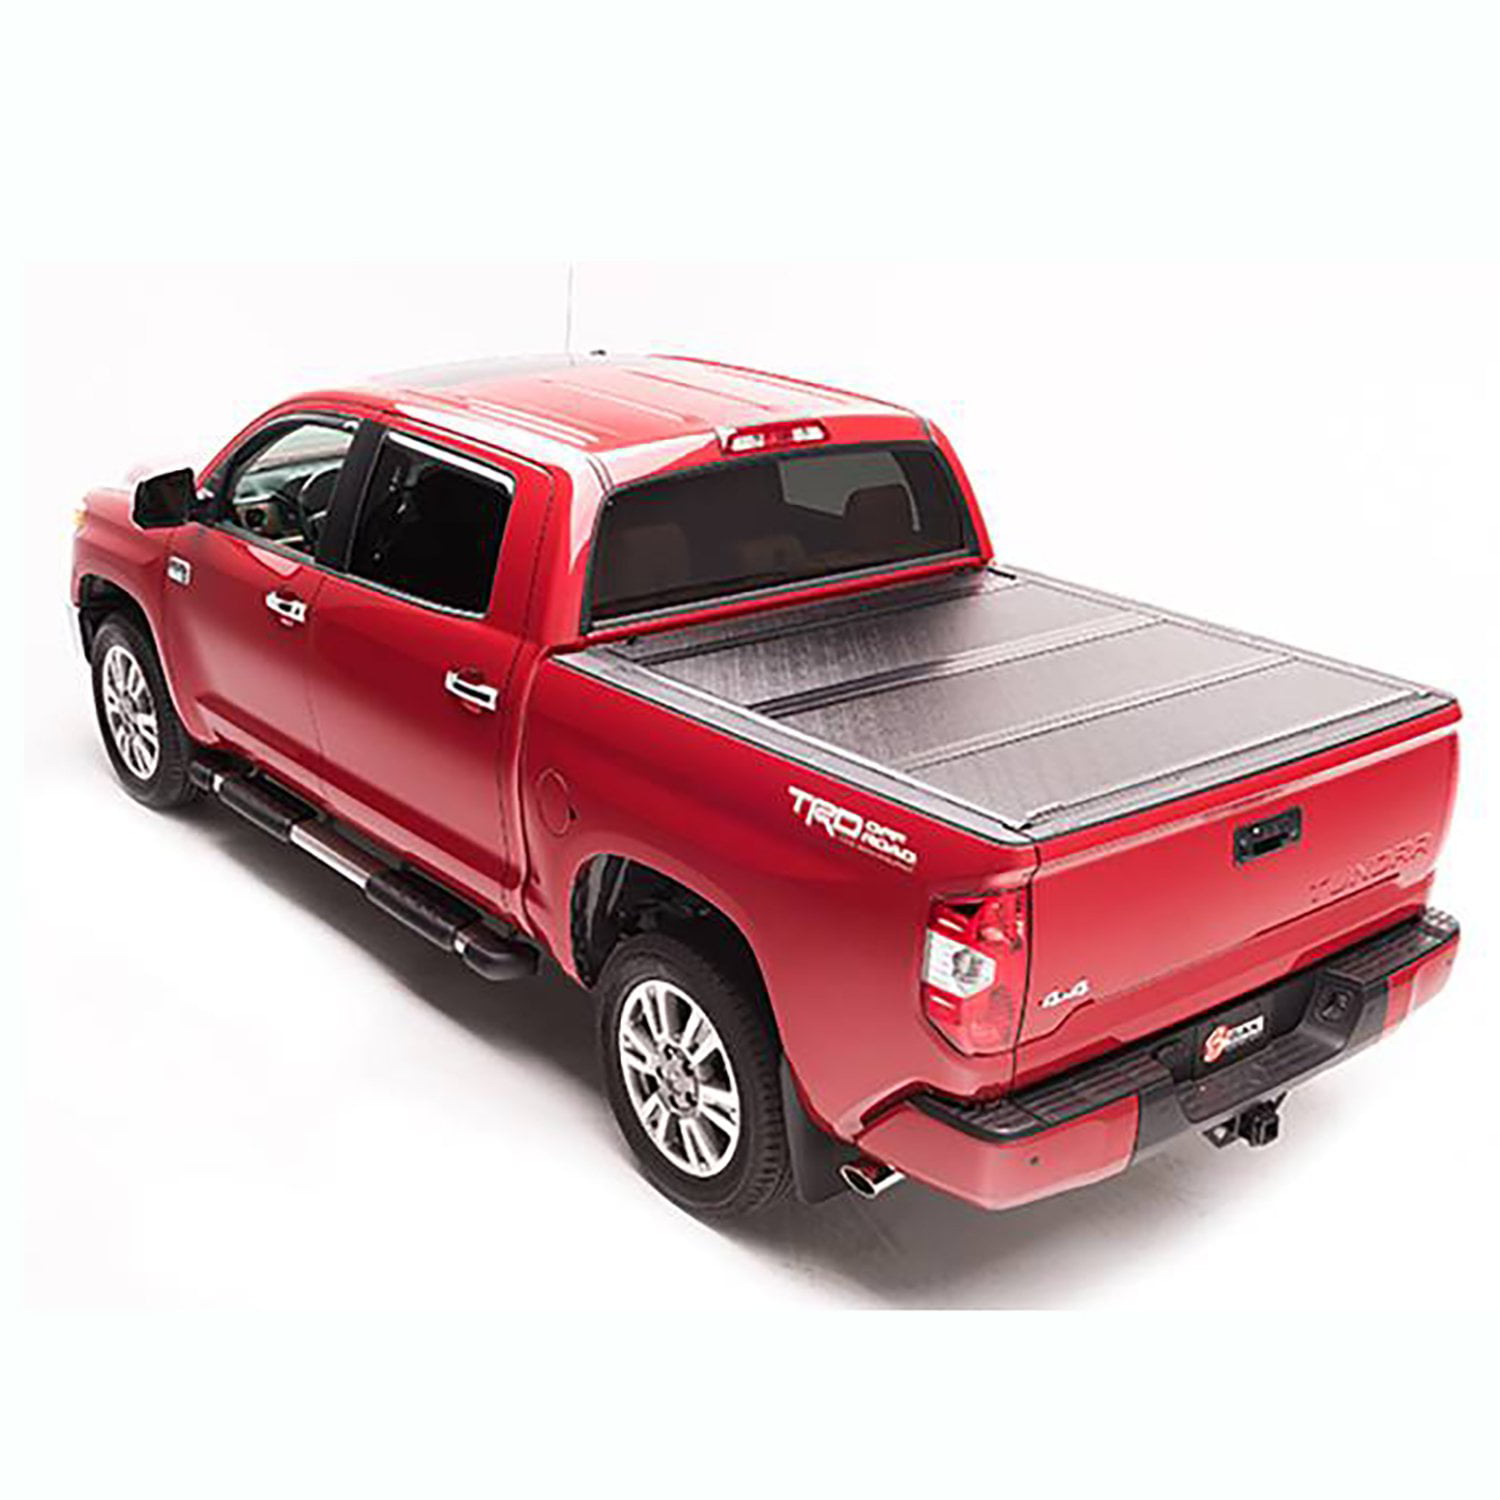 Bak Industries Hard Roll Up Tonneau Truck Bed Cover for 20092018 Dodge Ram